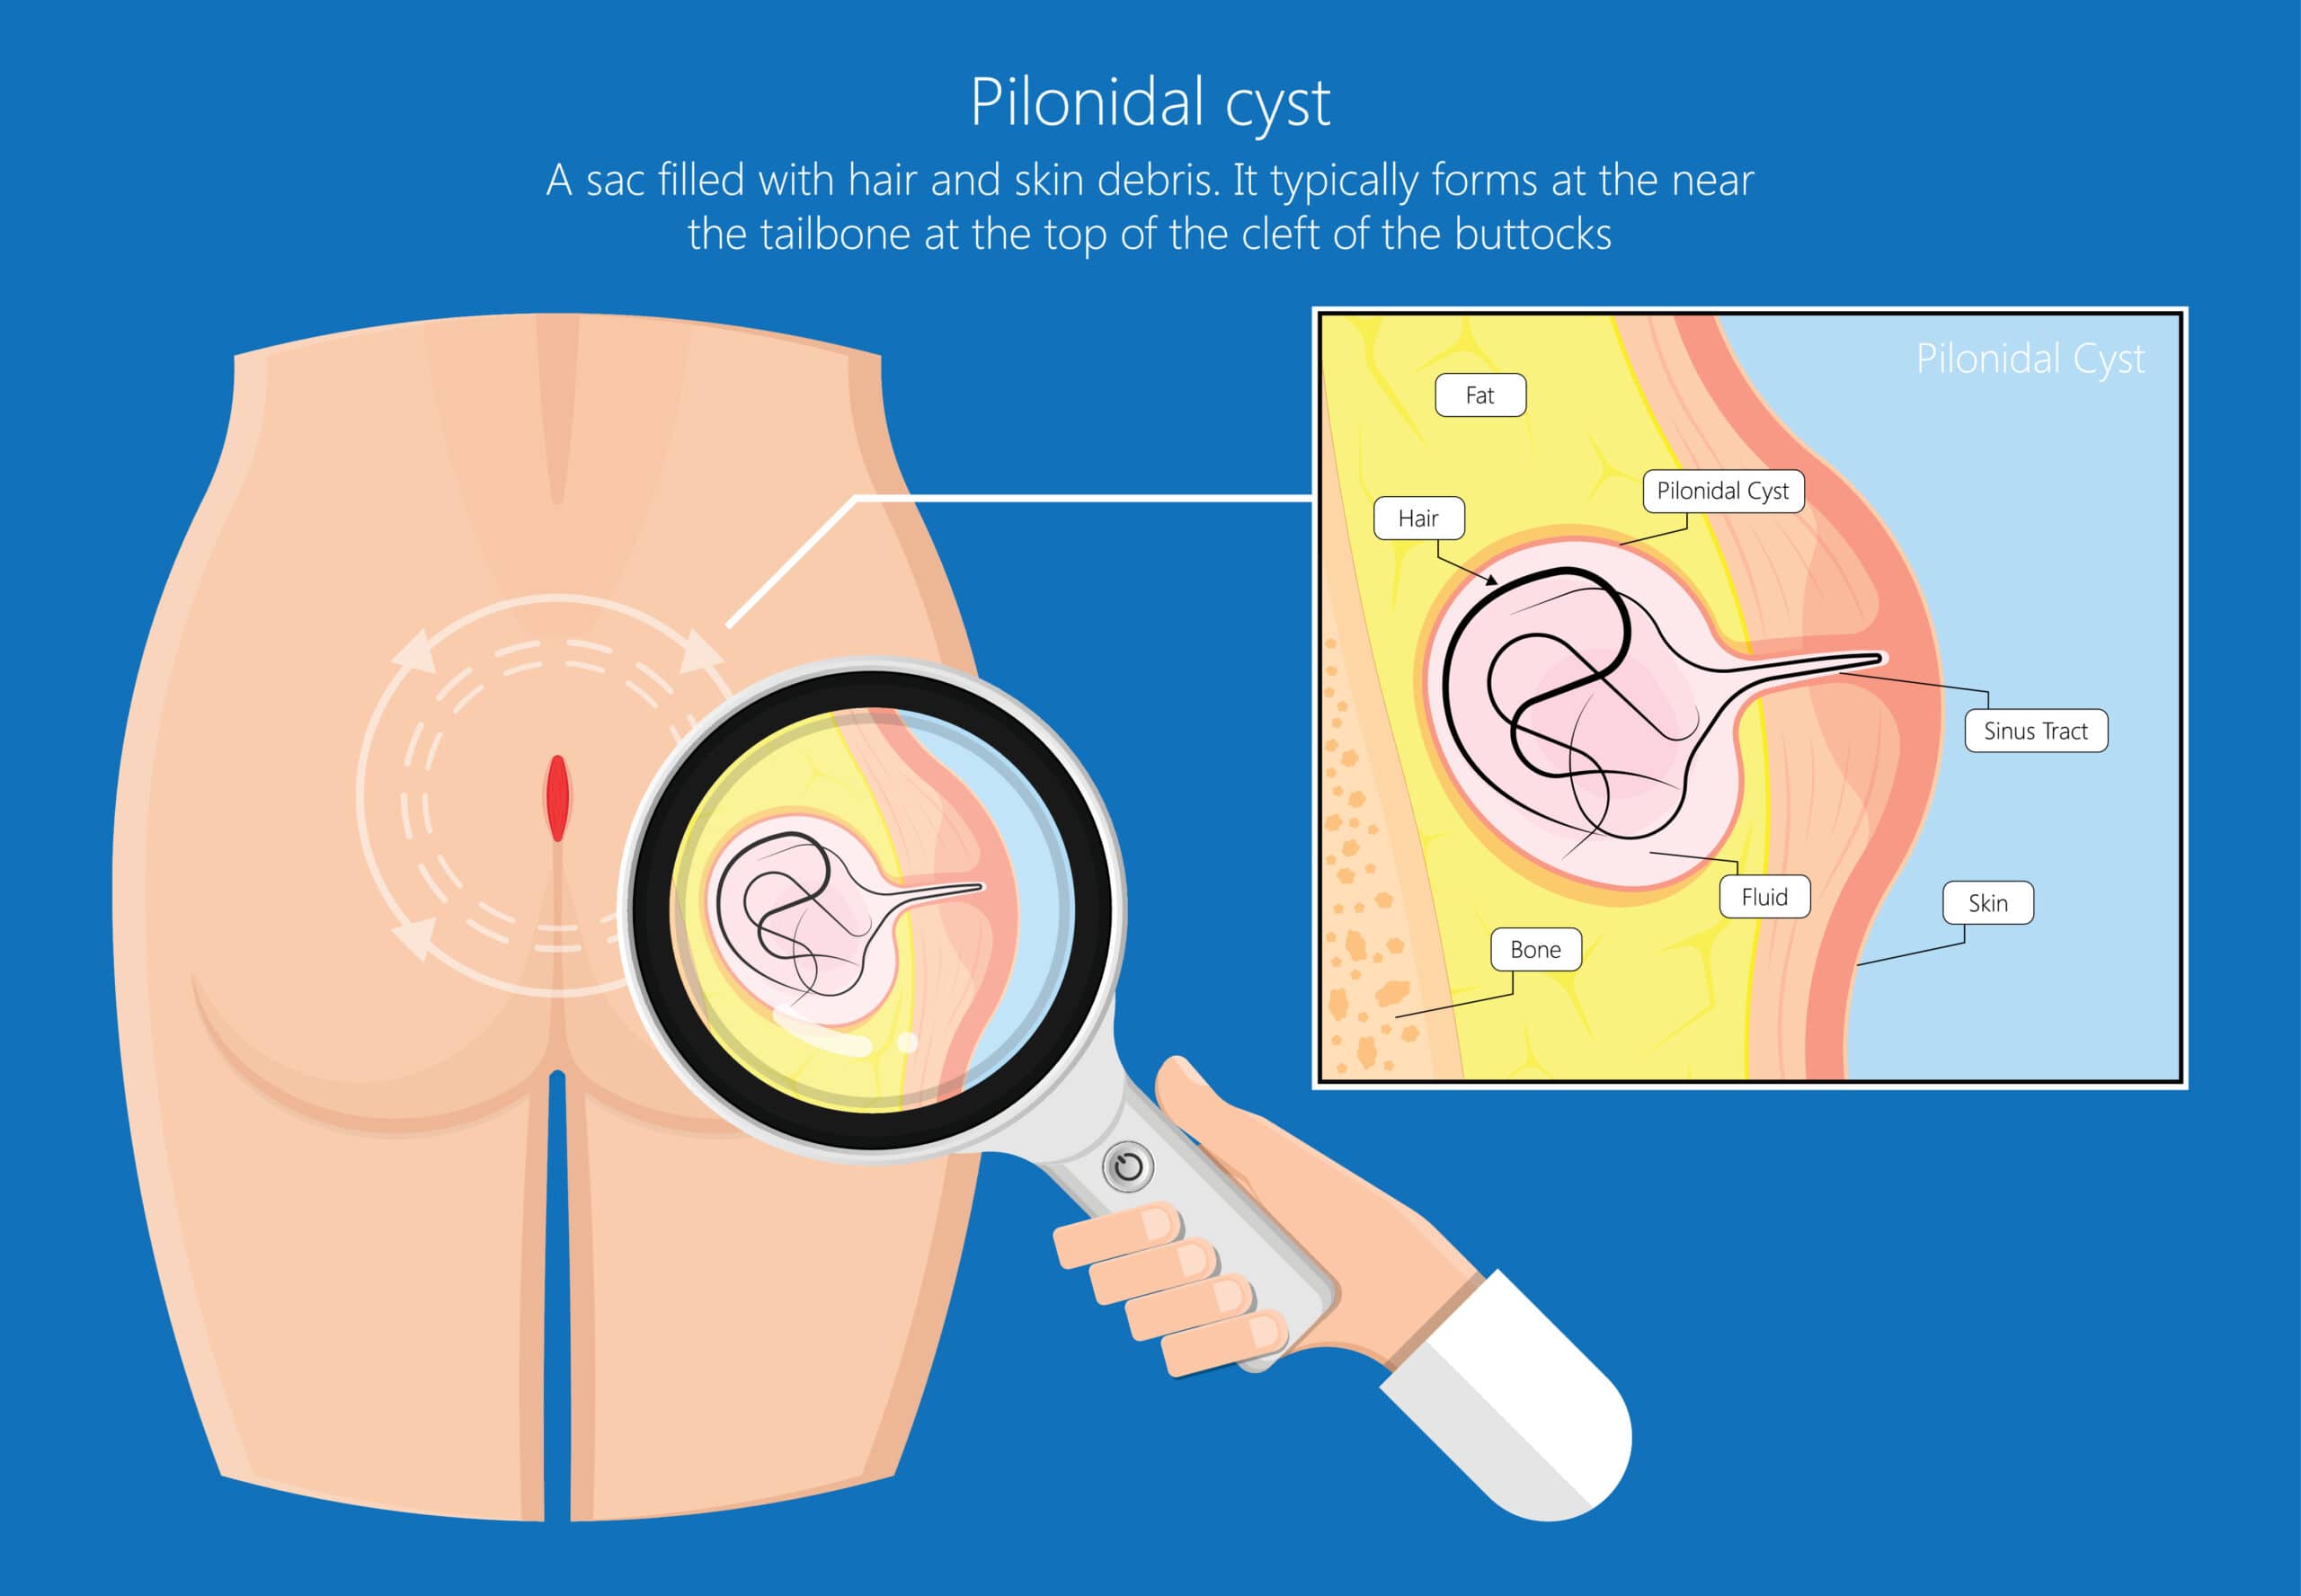 Pilonidal disease